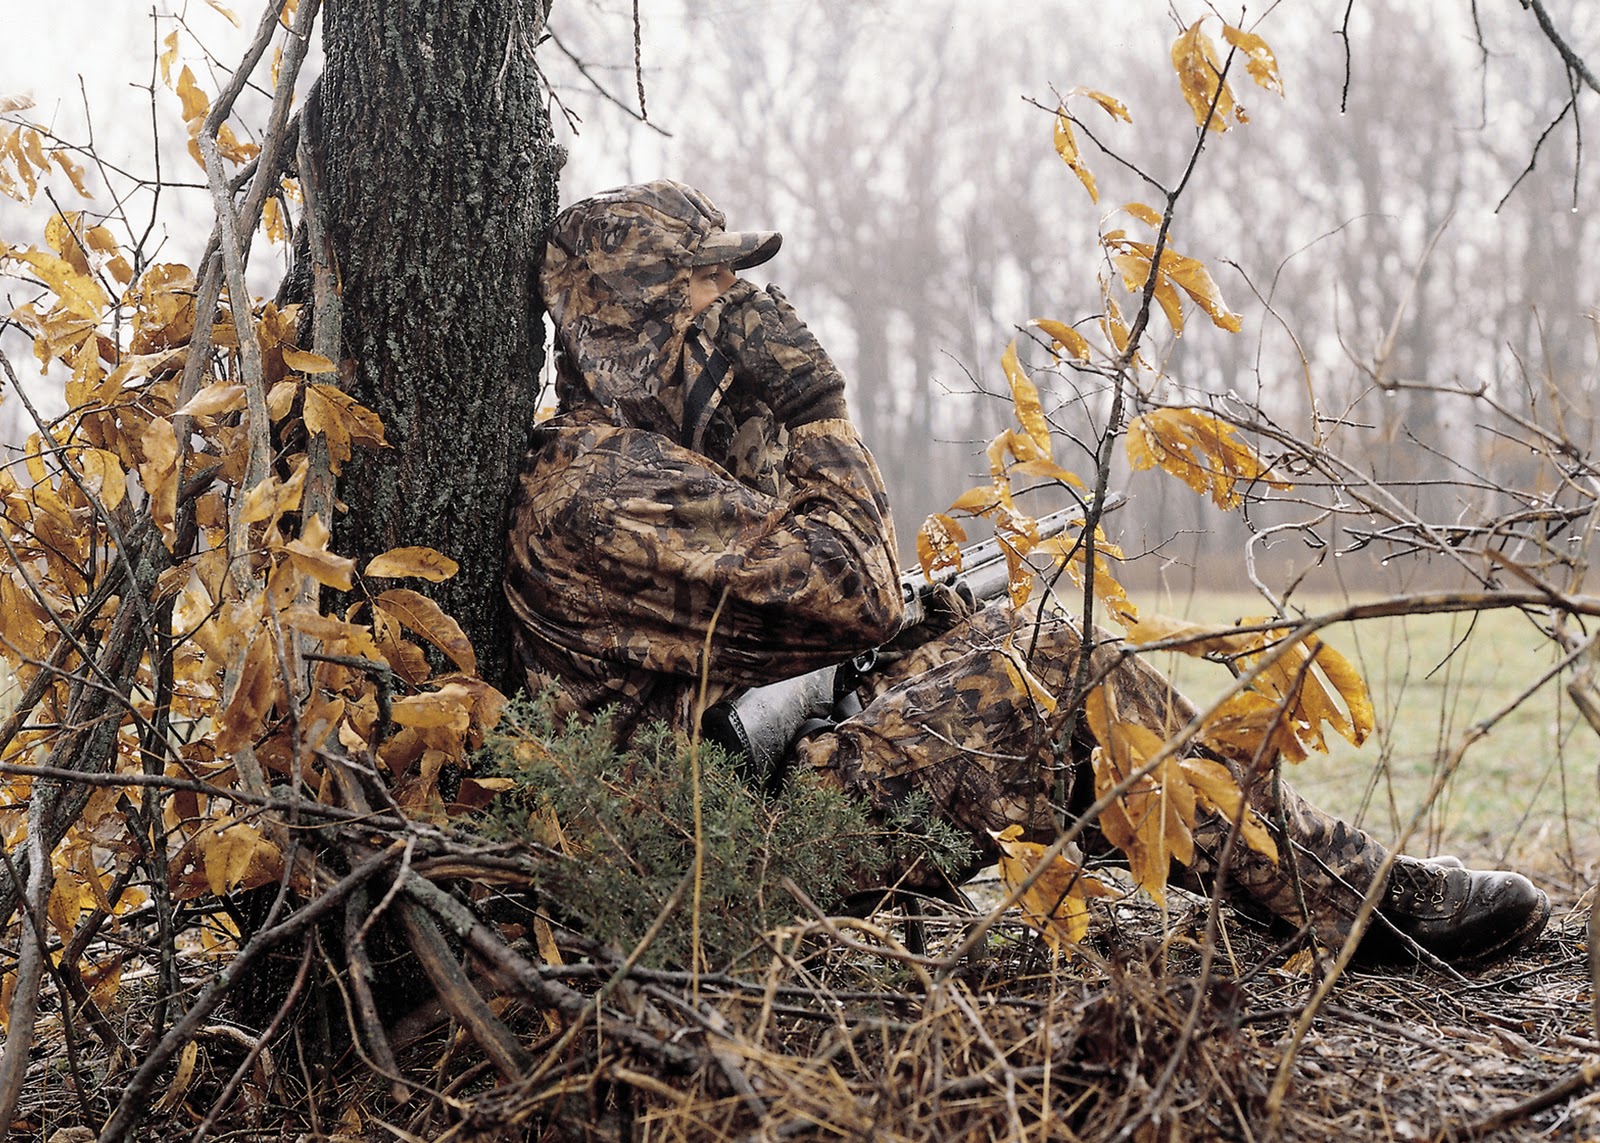 outdoorscribe: Fall turkey season underway; some hunters use bows